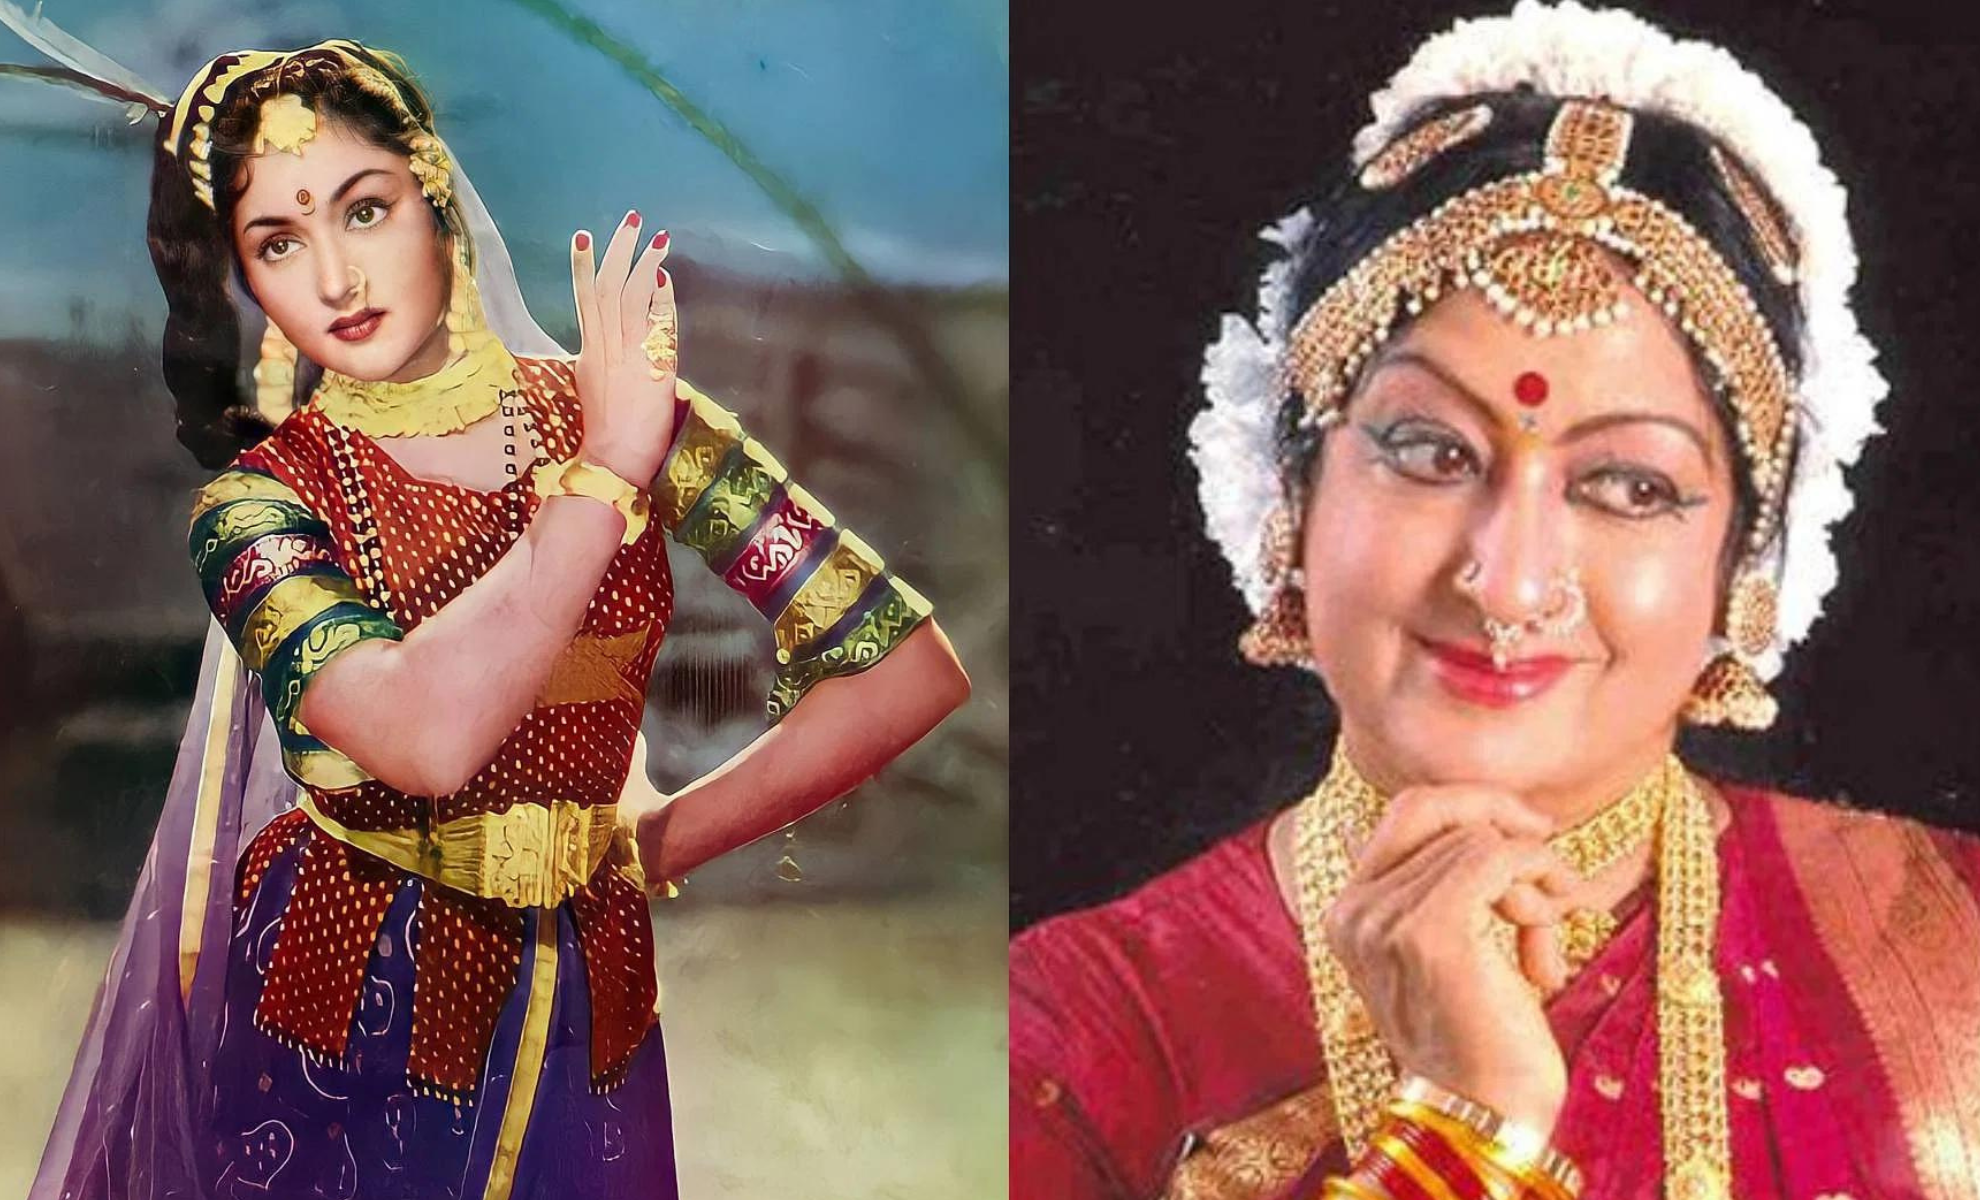 Actress Vyjayanti Mala and actor Chiranjeevi were awarded Padma Vibhushan